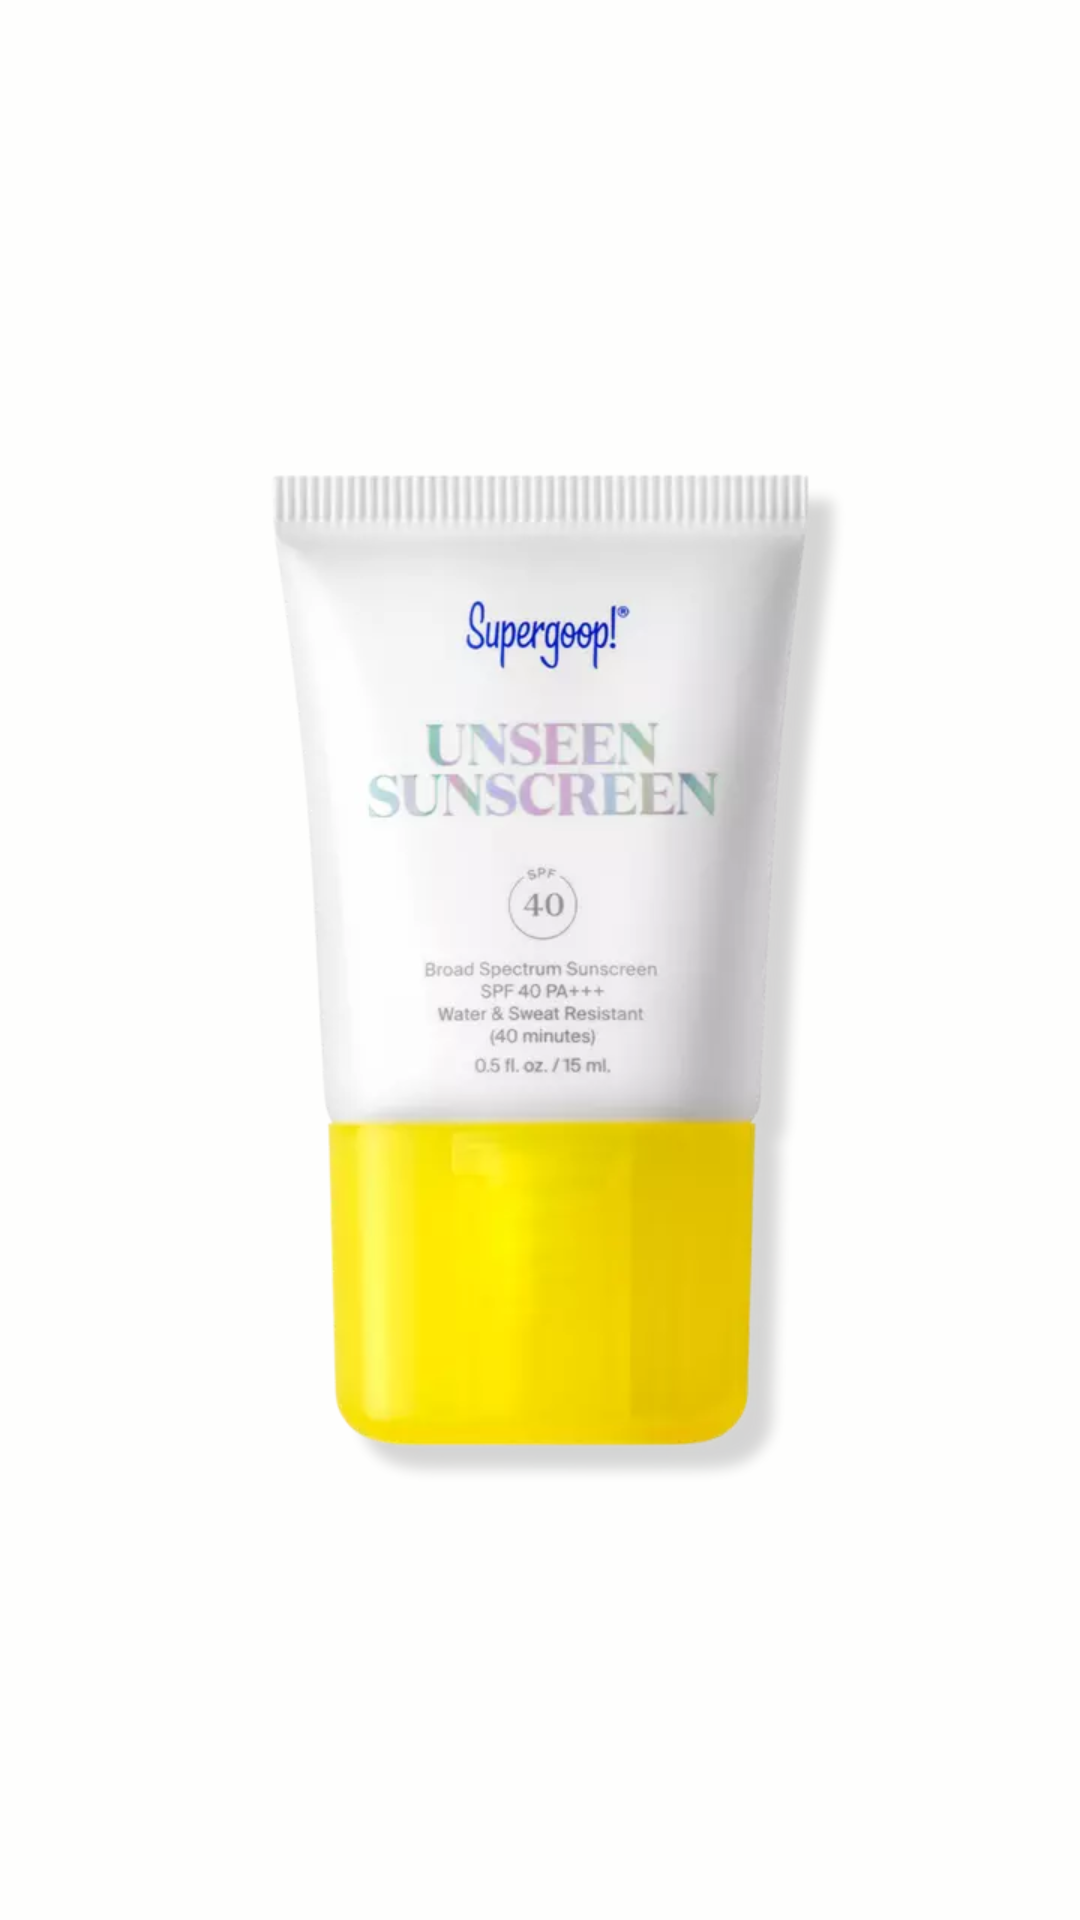 Supergoop Unseen Sunscreen Mini 0.5oz